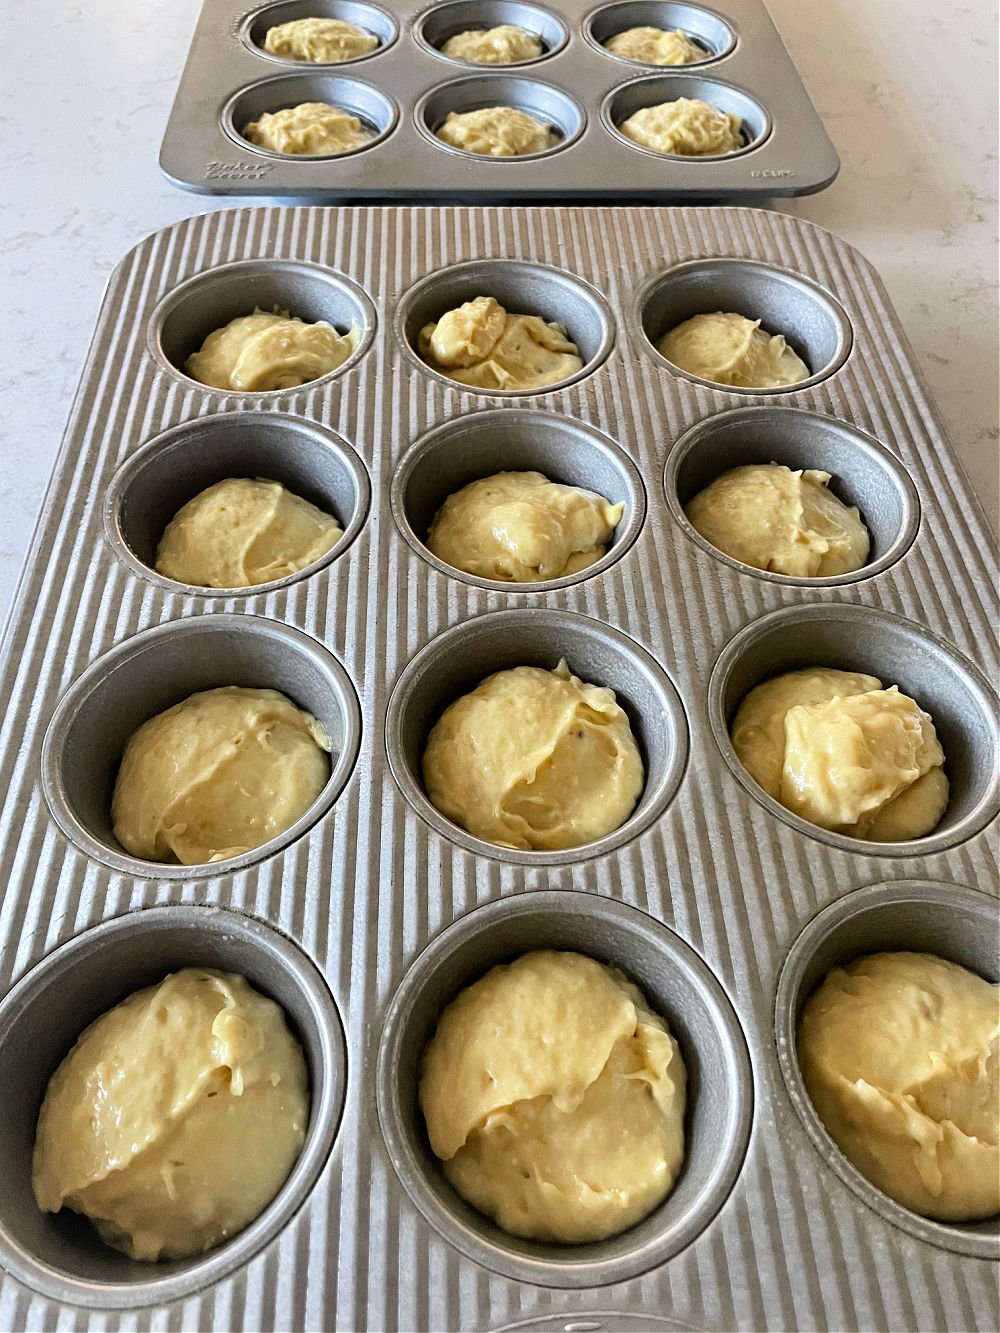 2 Ingredients Banana Muffin batter in muffin tin, ready to bake